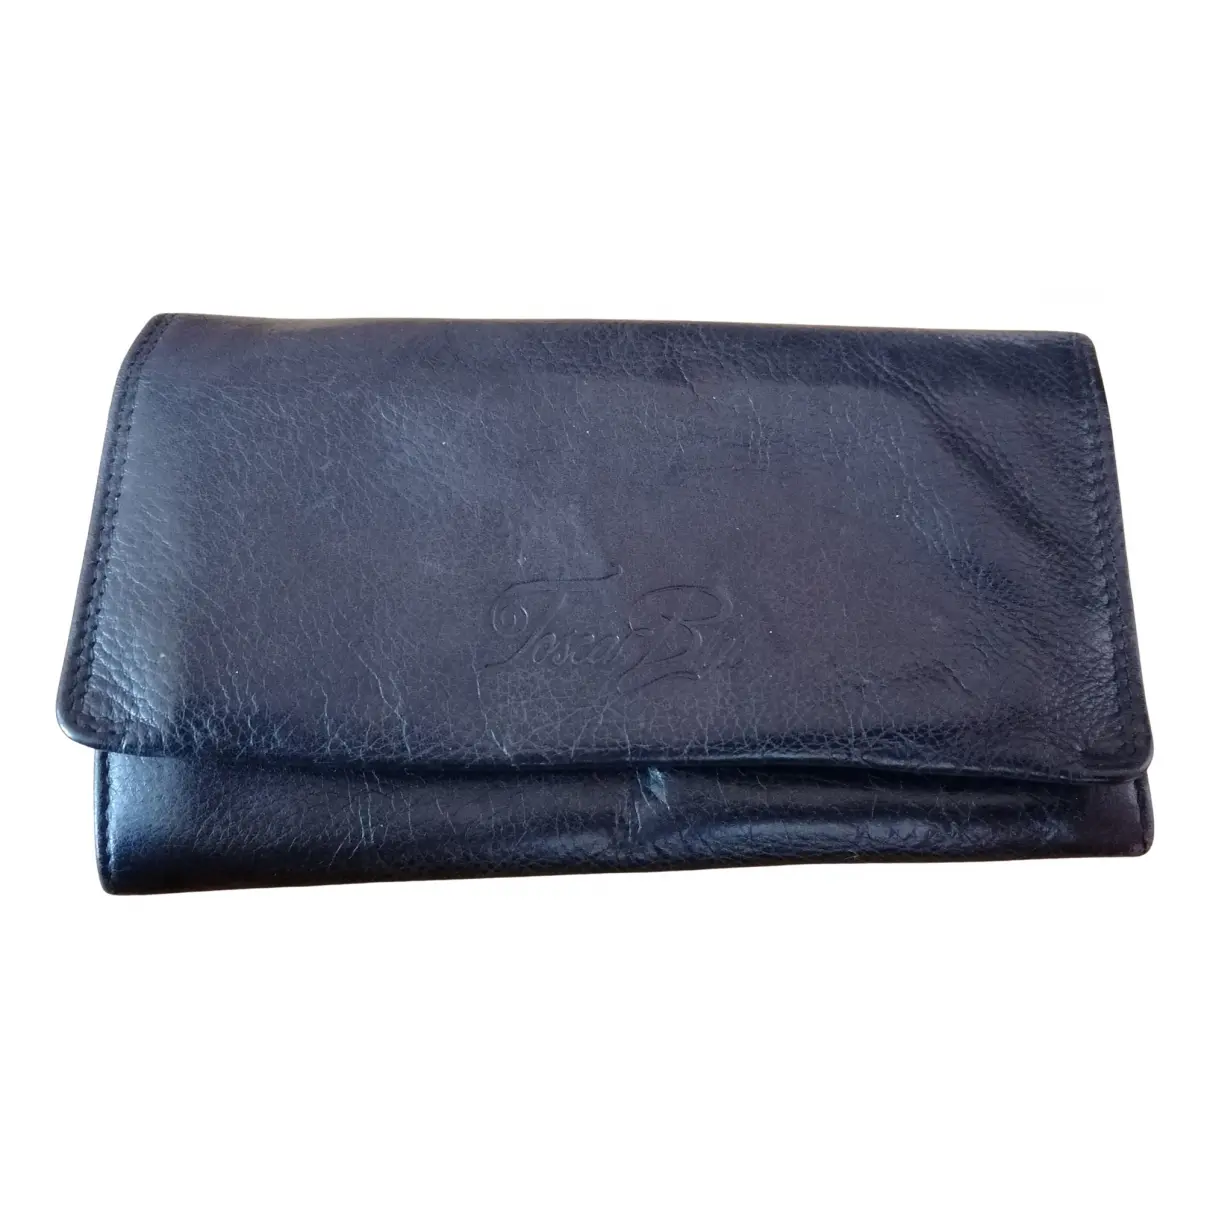 Leather wallet Tosca Blu